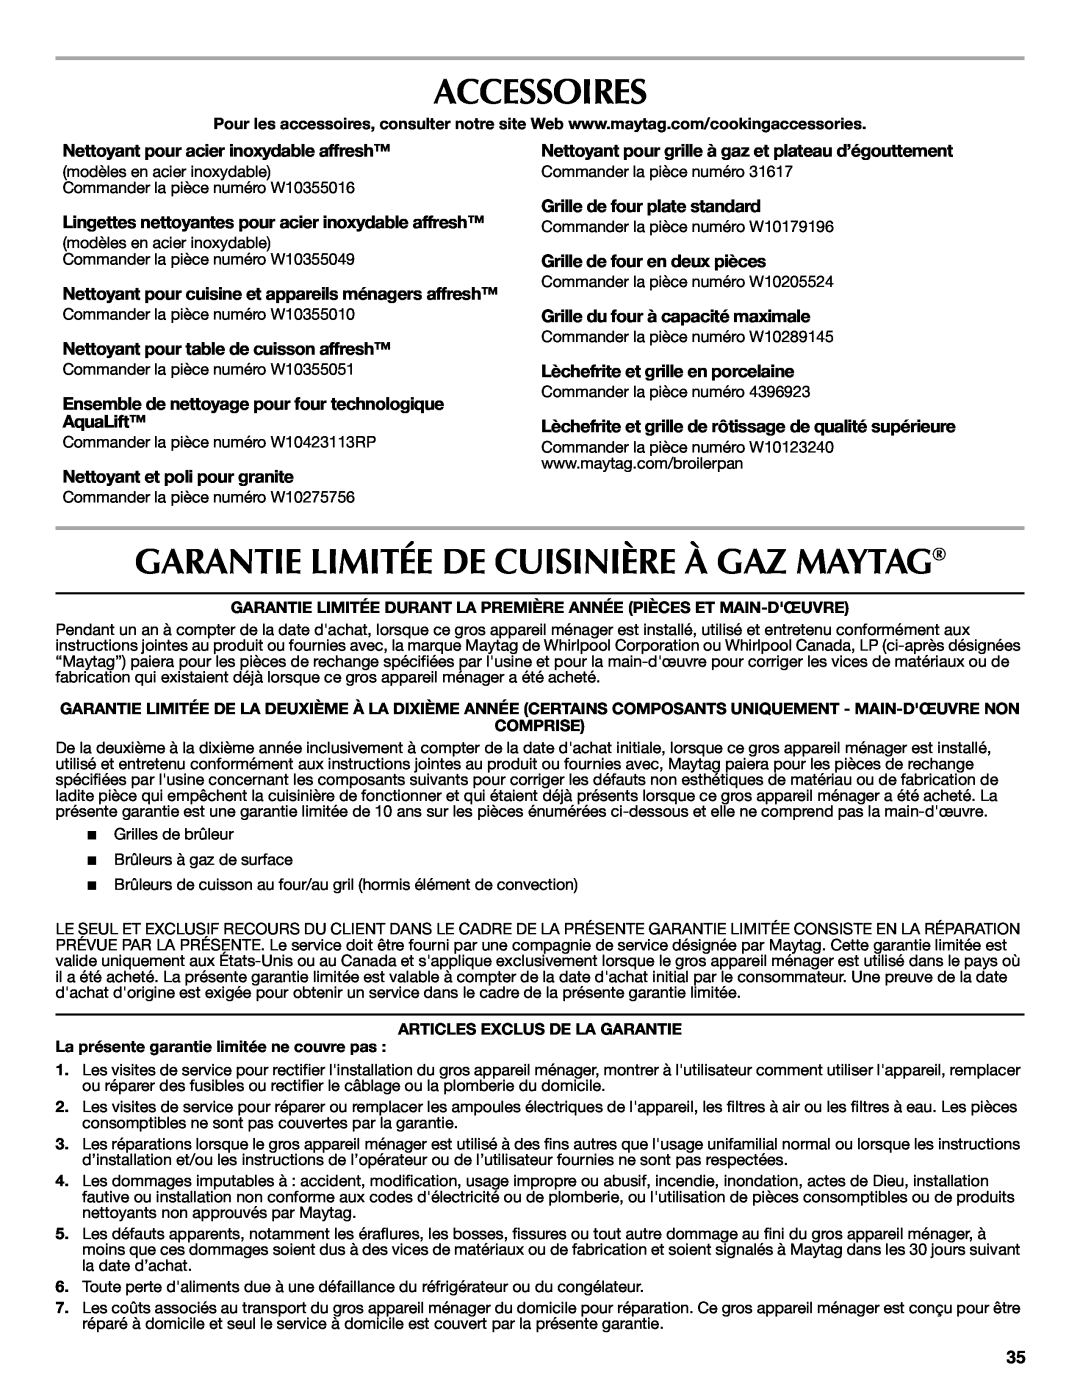 Maytag W10399029B warranty Accessoires, Garantie Limitée De Cuisinière À Gaz Maytag 